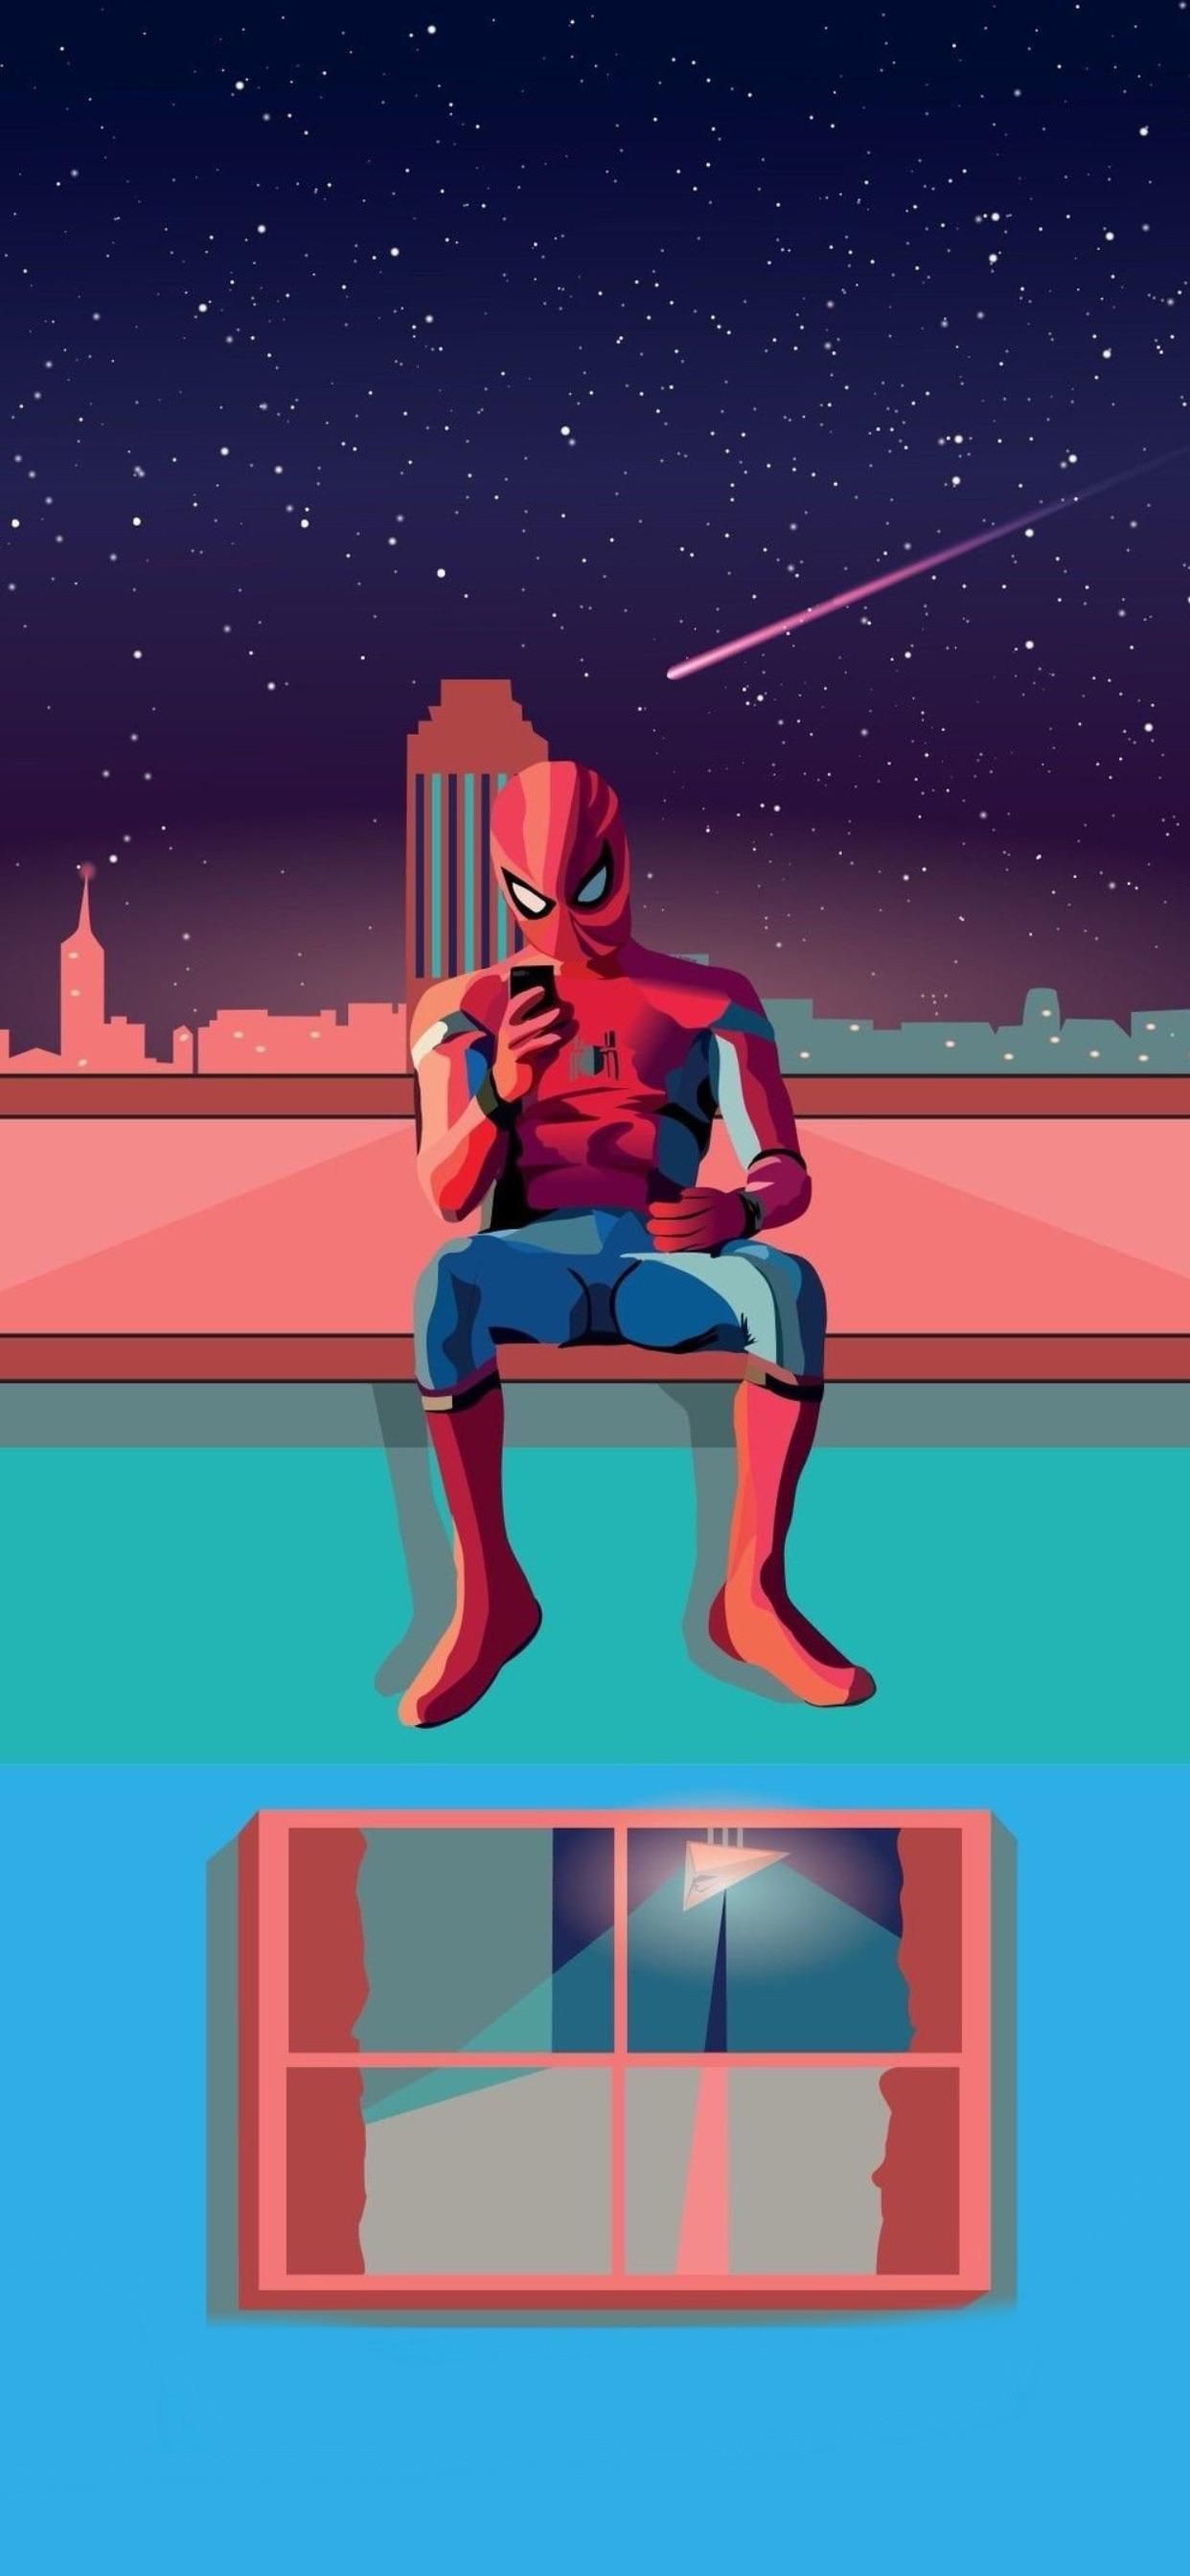 Spiderman to original artist. iPhone X Wallpaper